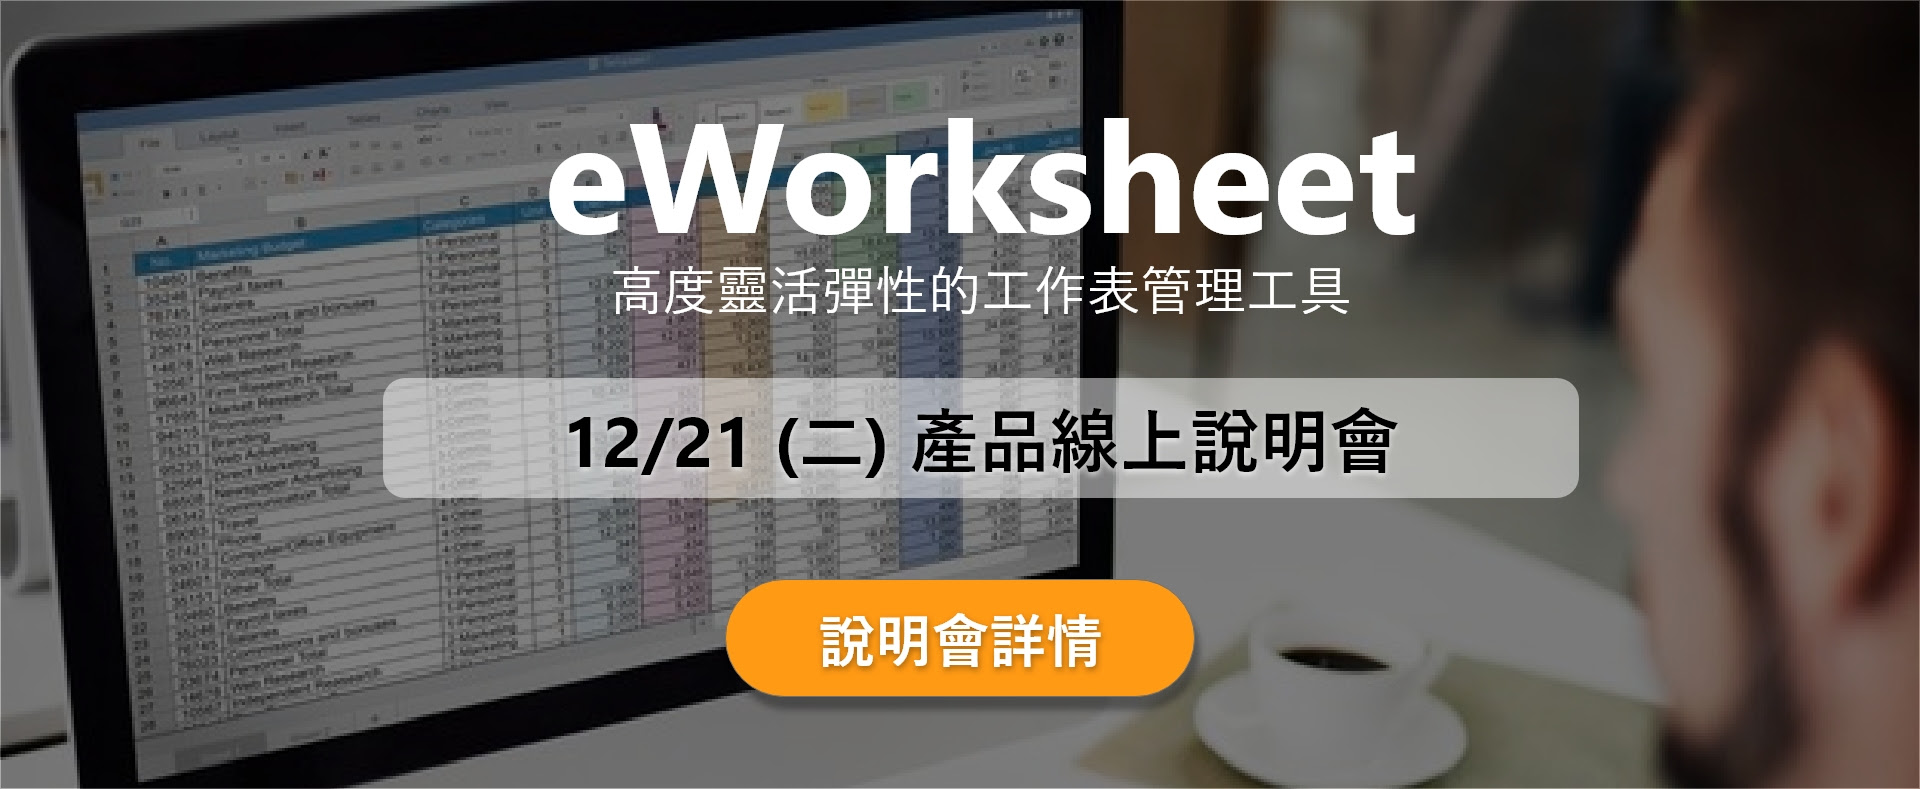 12/21 eWorksheet 產品線上說明會